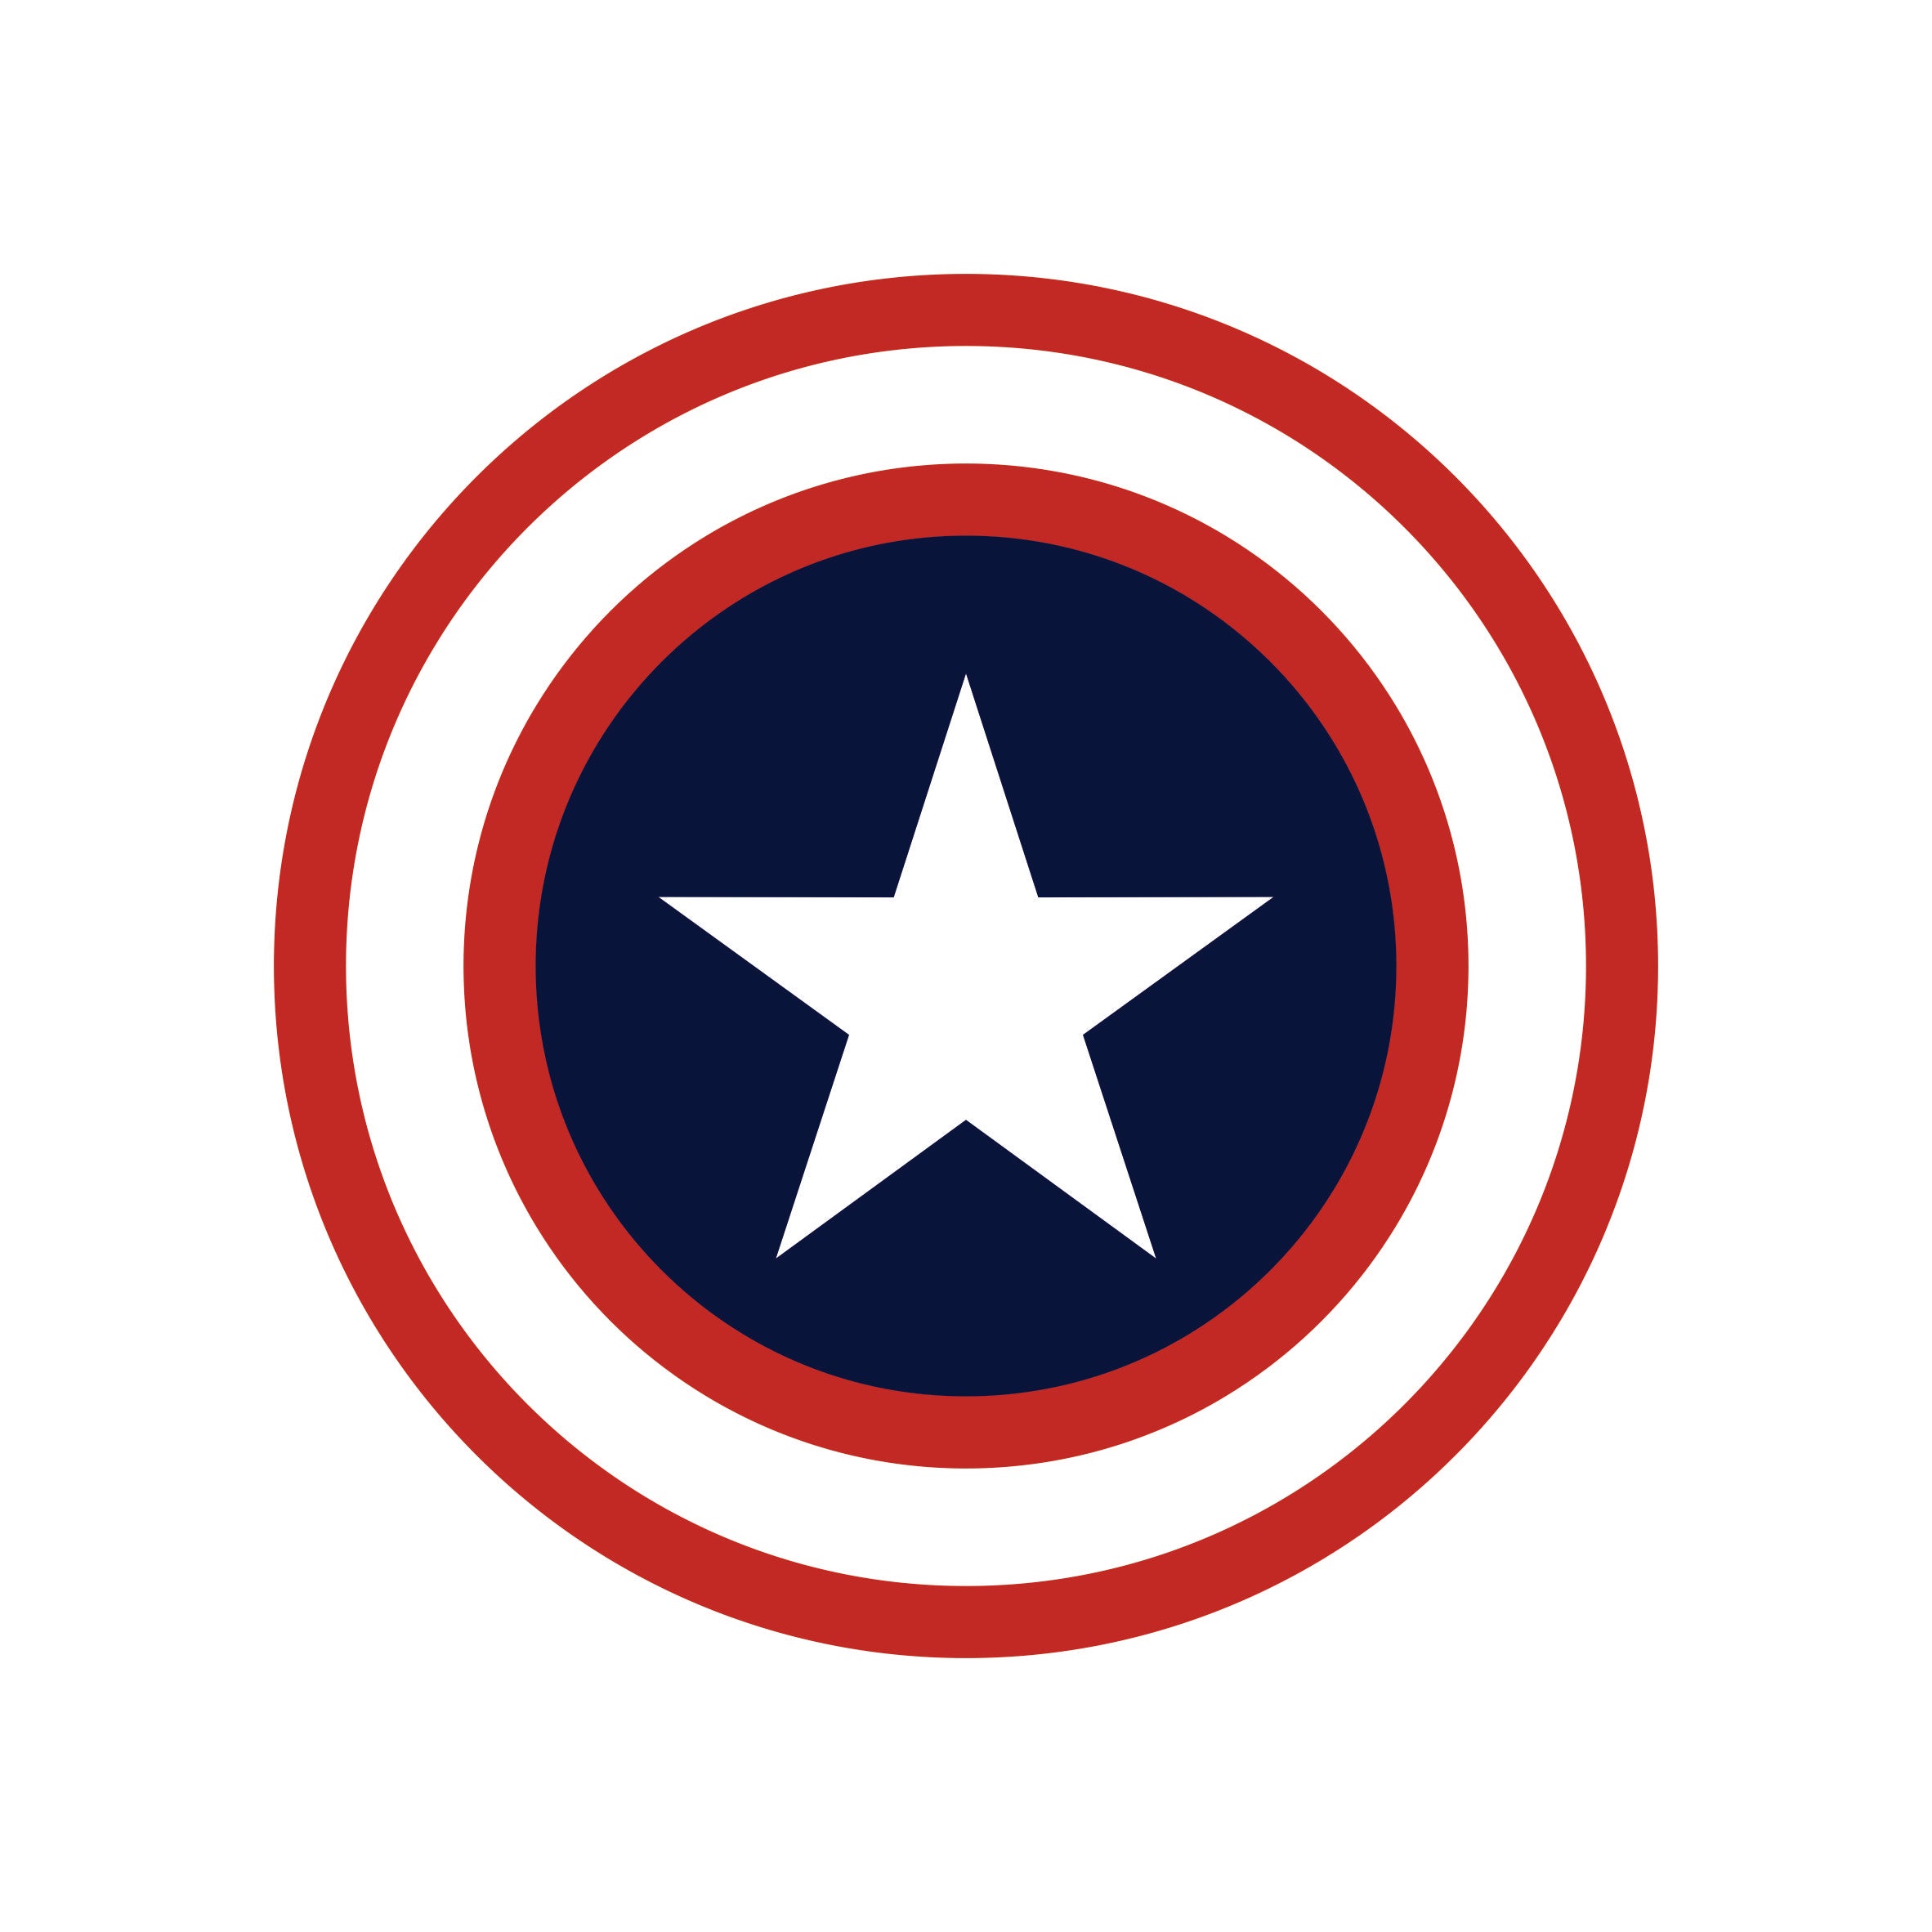 Captain America Shield Reactr Tshirts For Men - Eyewearlabs